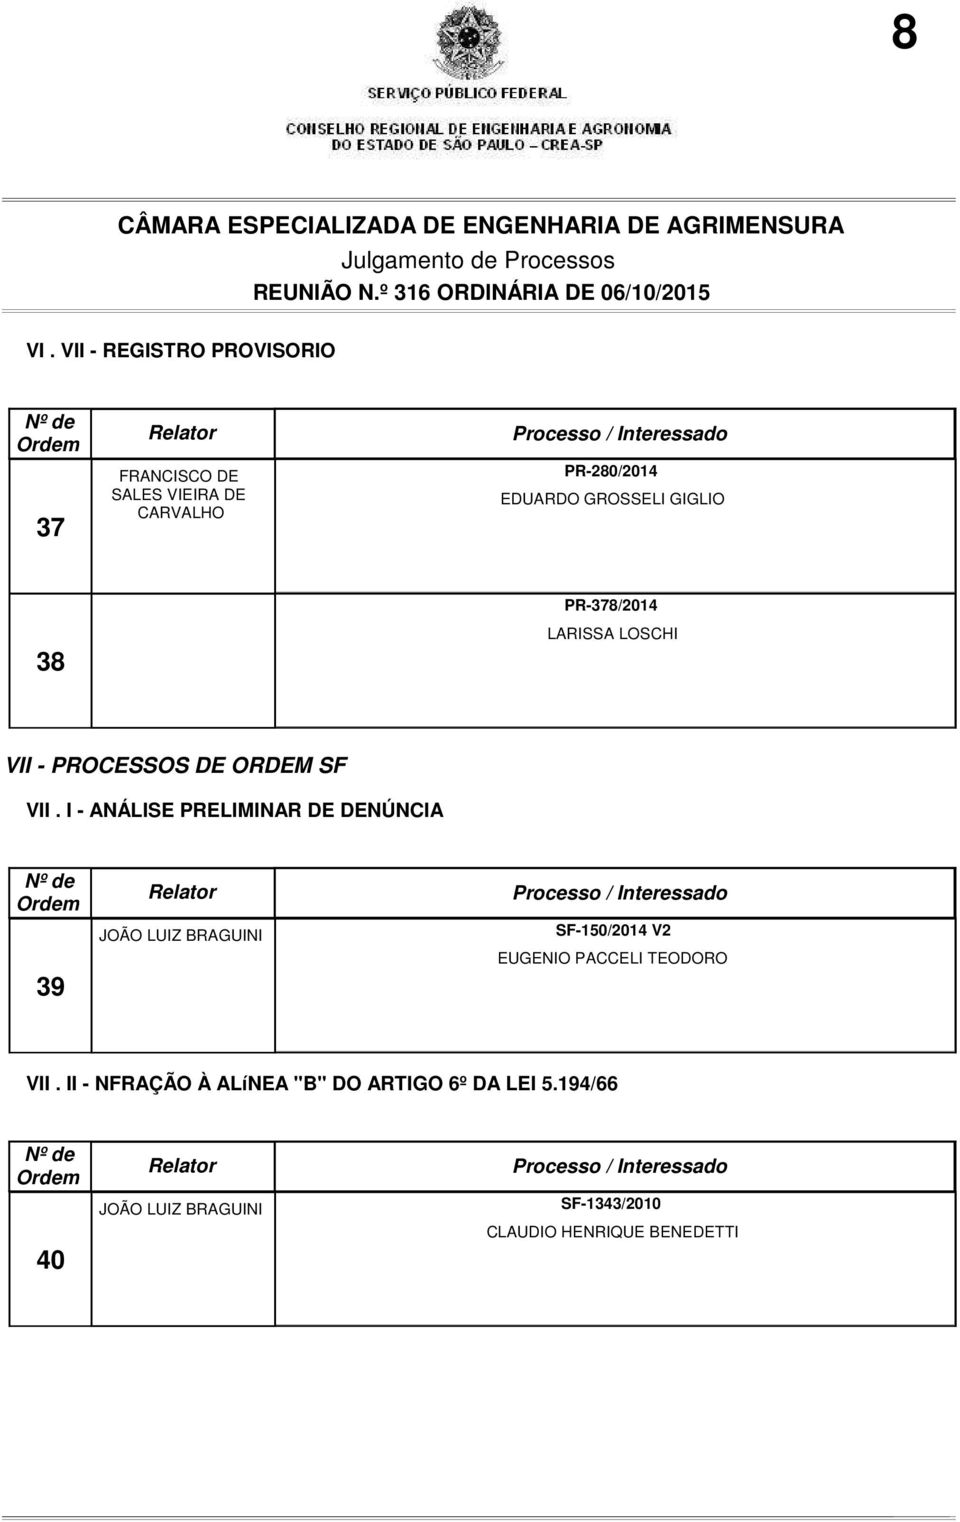 I - ANÁLISE PRELIMINAR DE DENÚNCIA 39 SF-150/2014 V2 EUGENIO PACCELI TEODORO